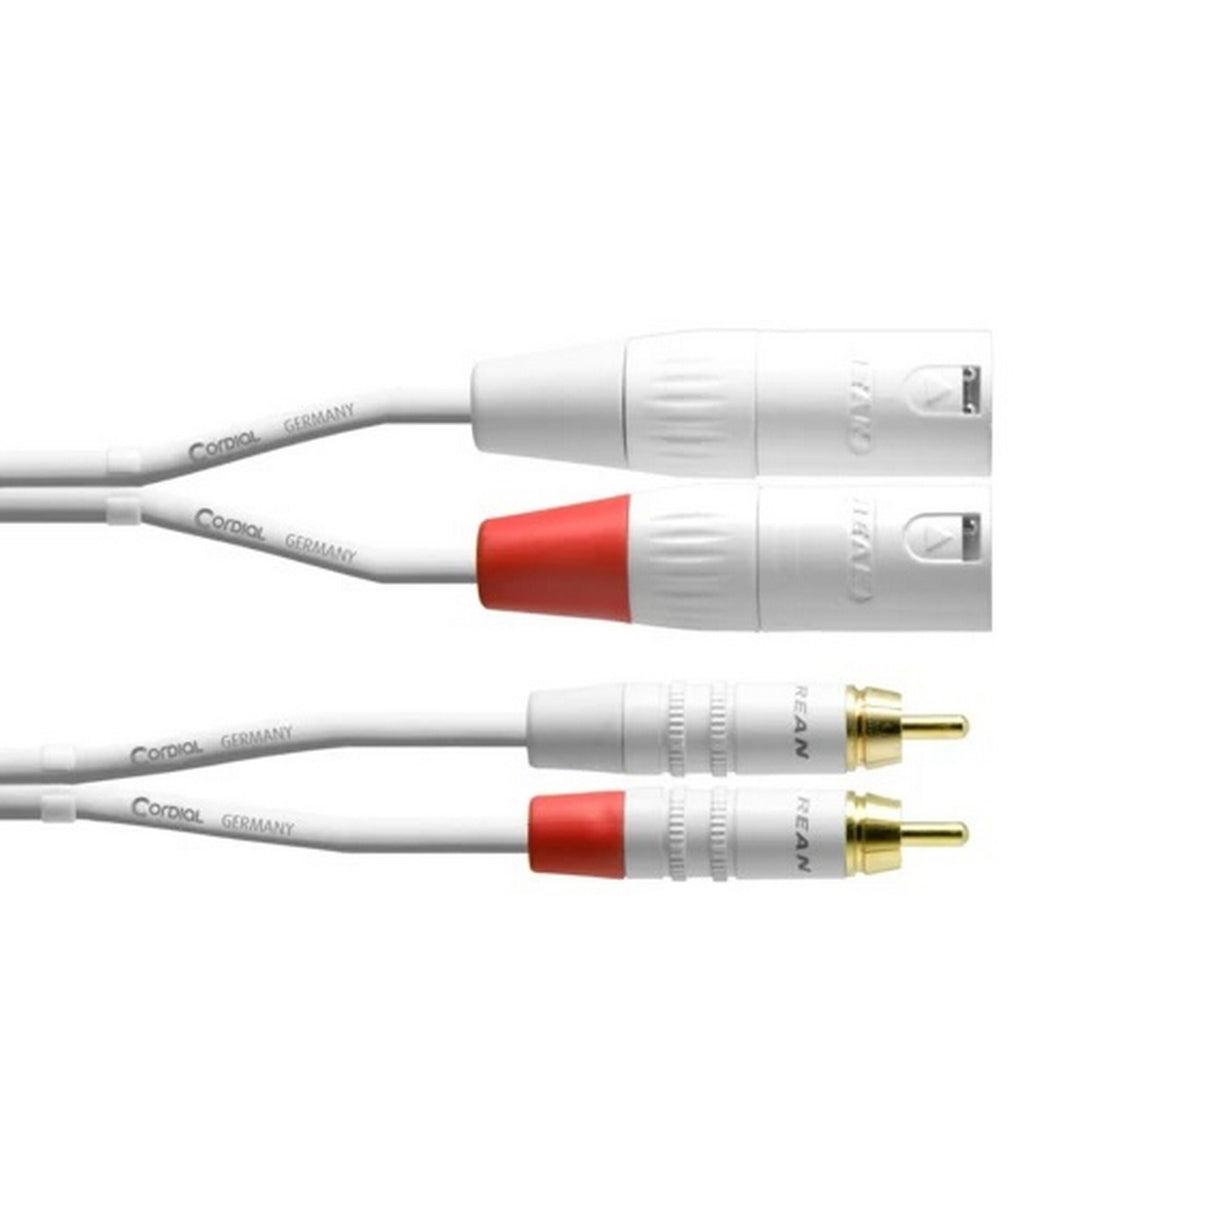 Cordial CFU 1.5 MC-SNOW 2 x XLRM to 2 x RCA Twin Cable/Adapter, White, 5-Feet